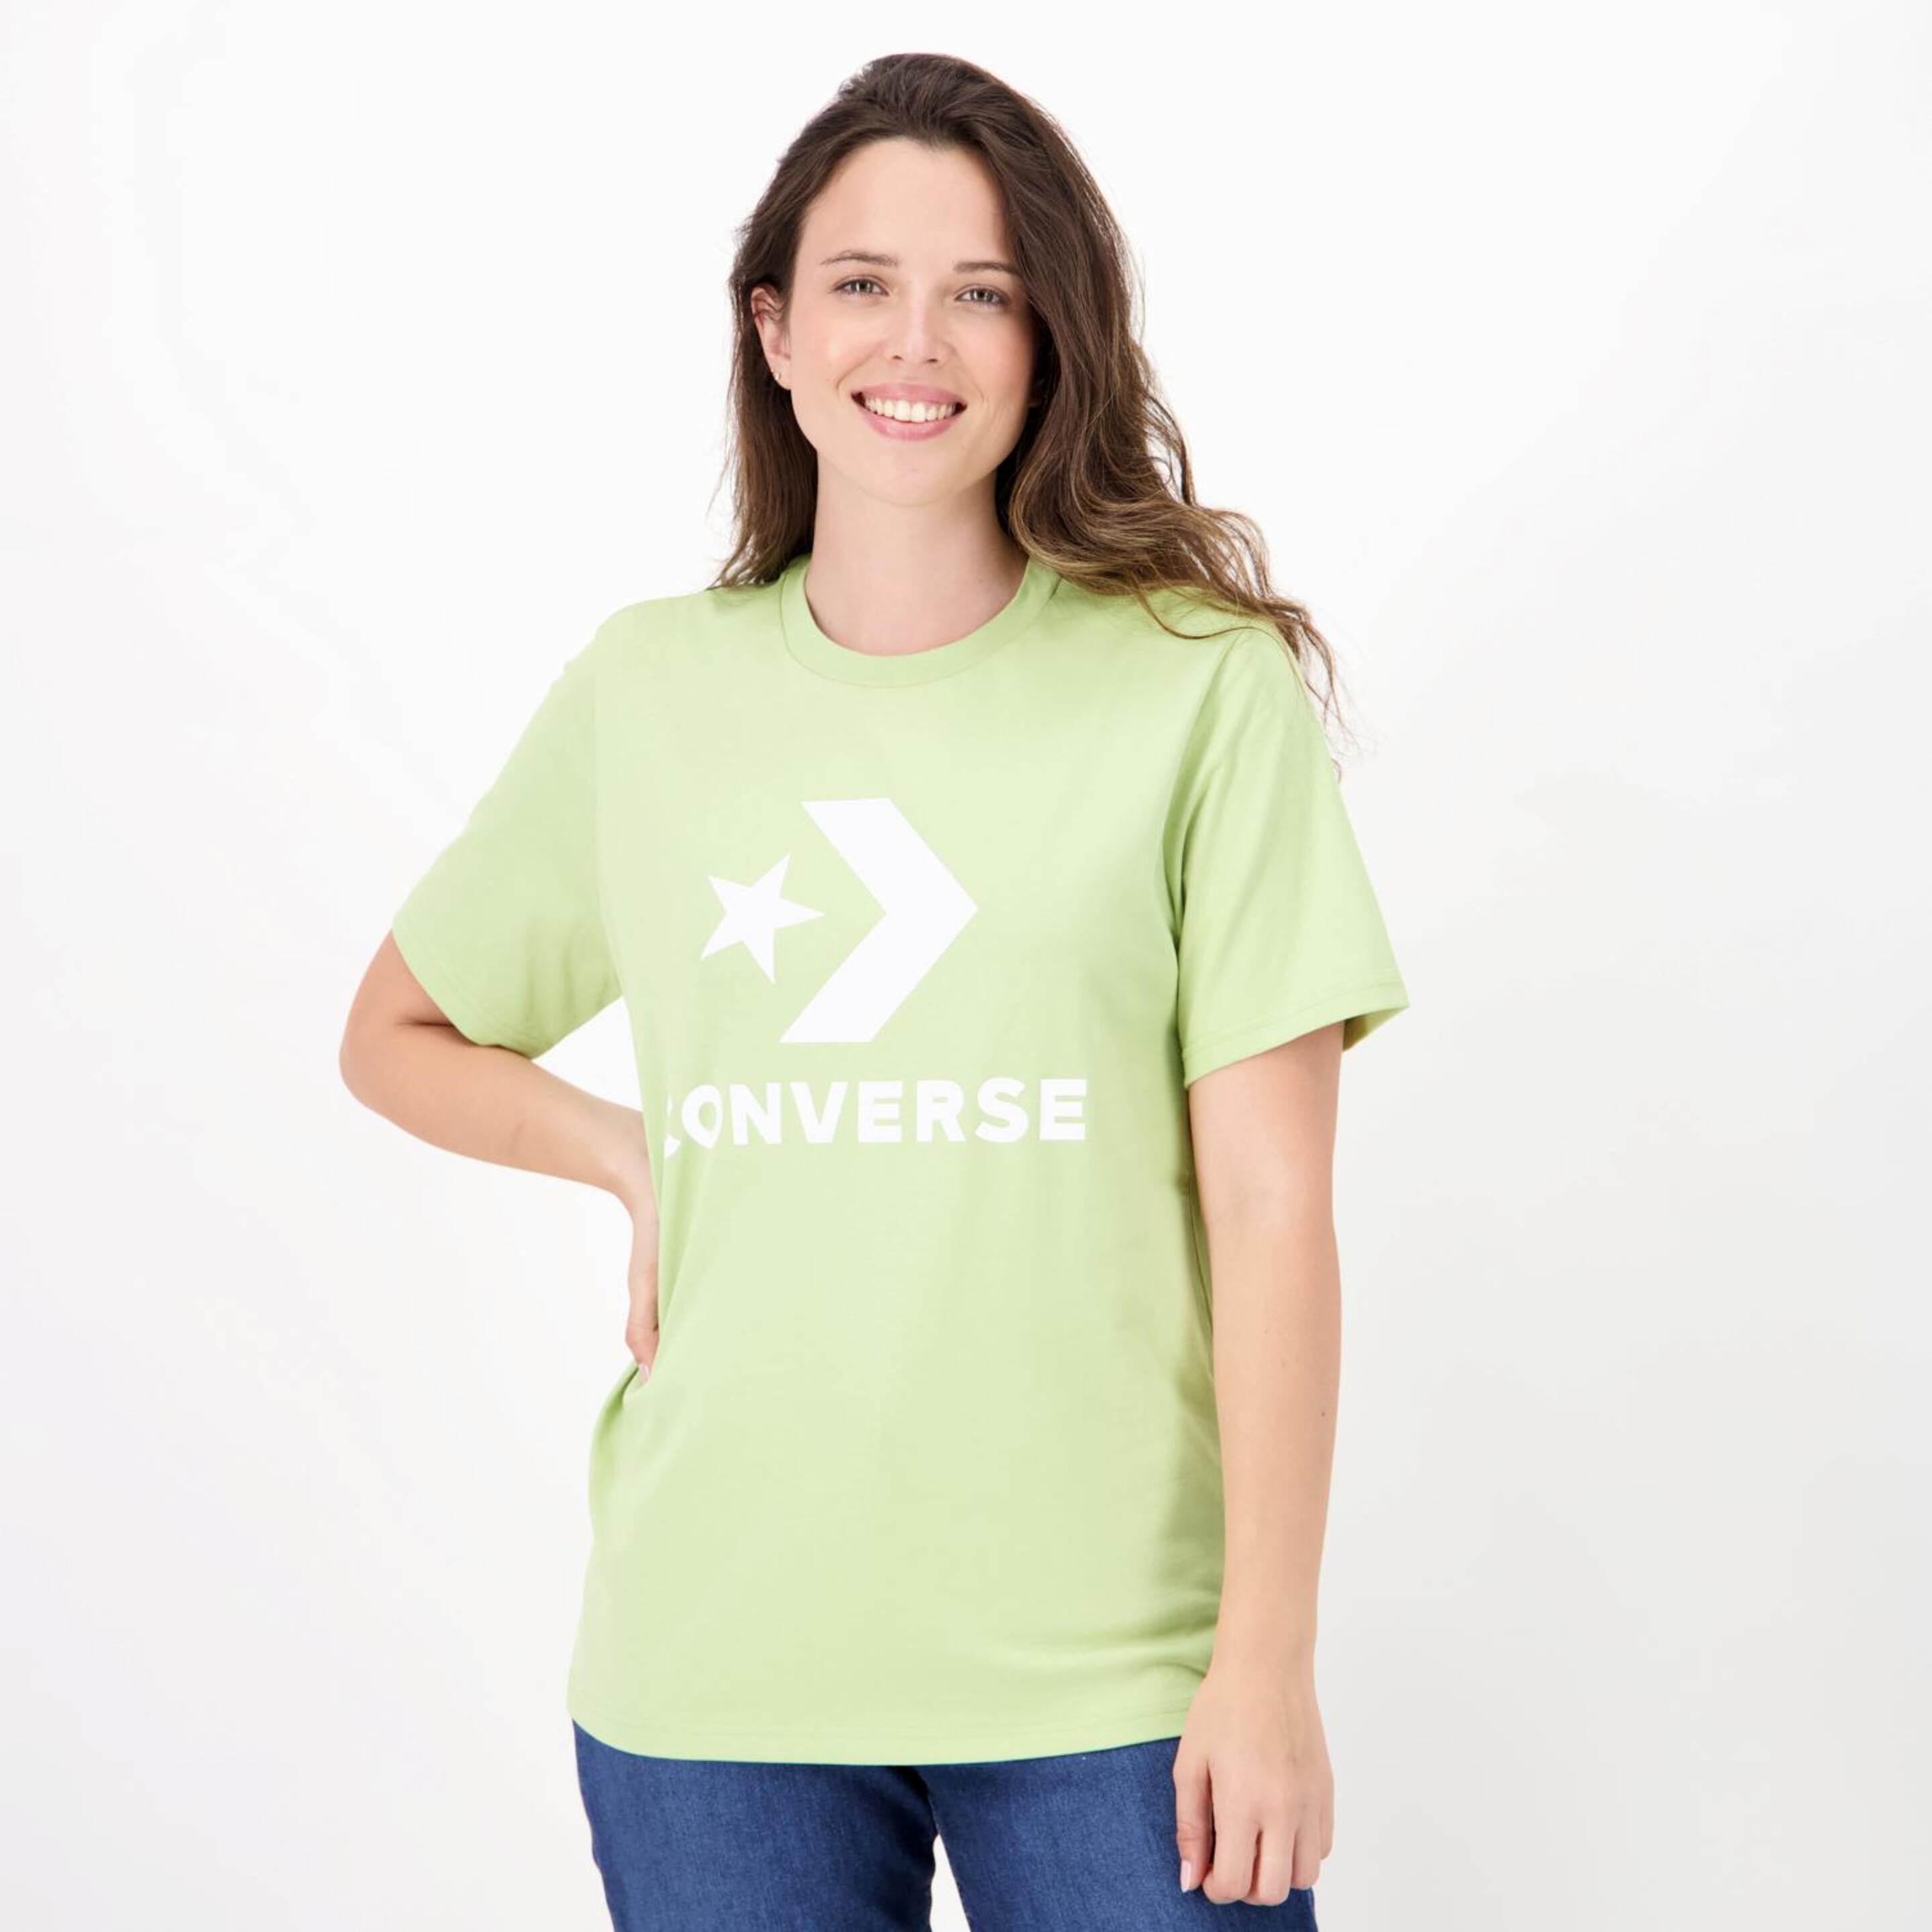 Converse Star Chevron - verde - Camiseta Mujer